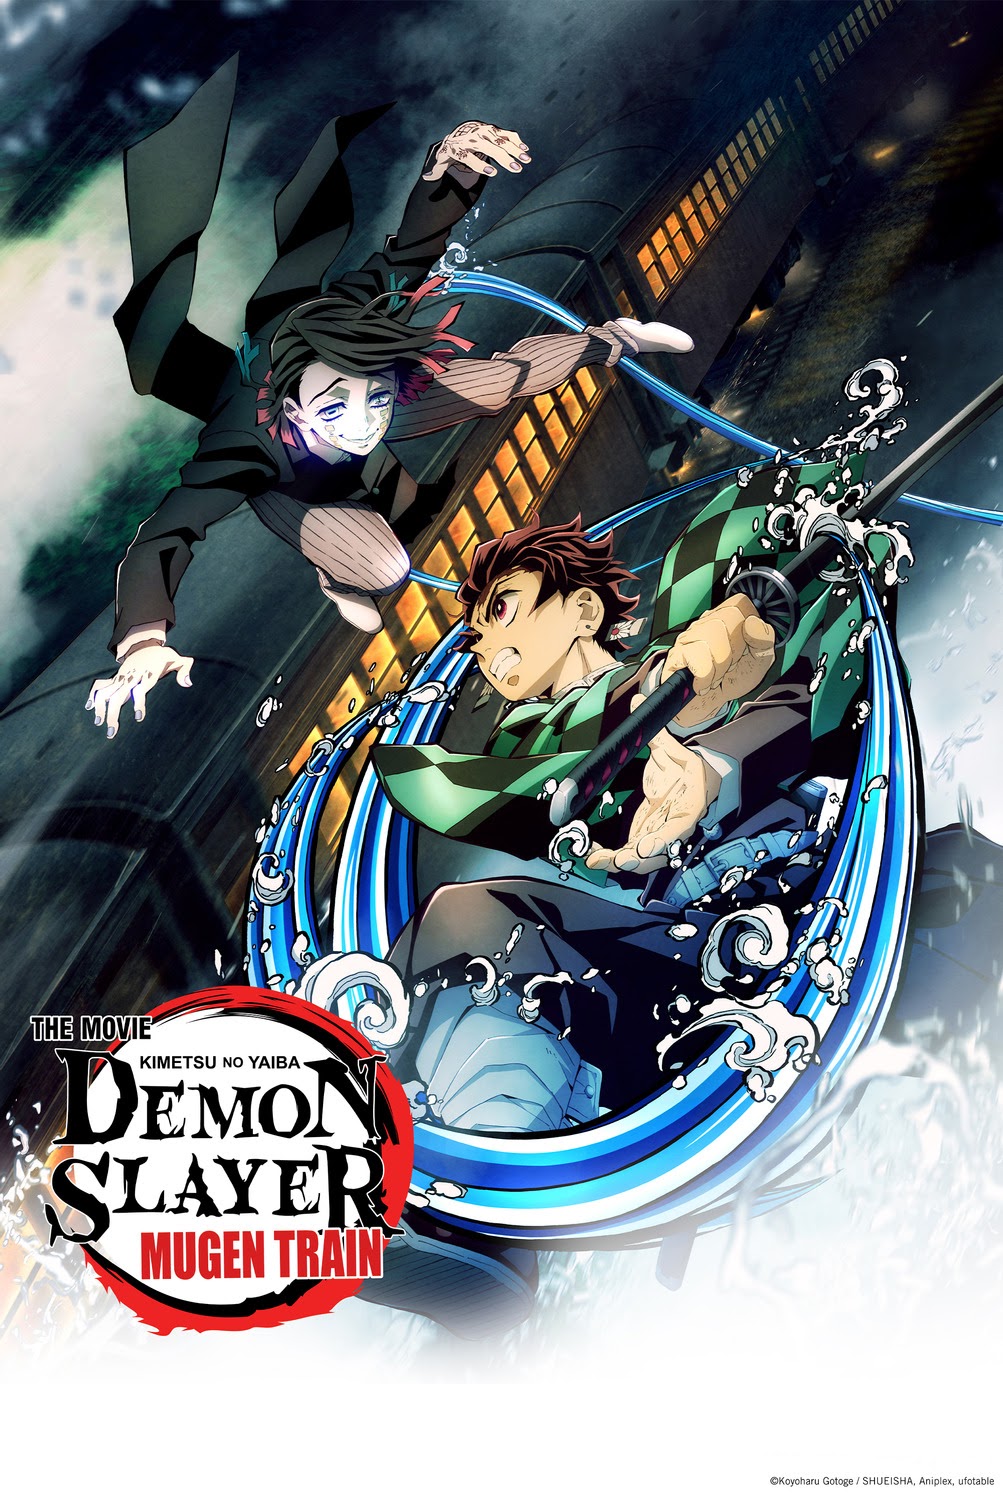 Demon Slayer: Kimetsu no Yaiba - Mugen Train Arc e Entertainment District  Arc em breve na Crunchyroll - TVLaint Brasil